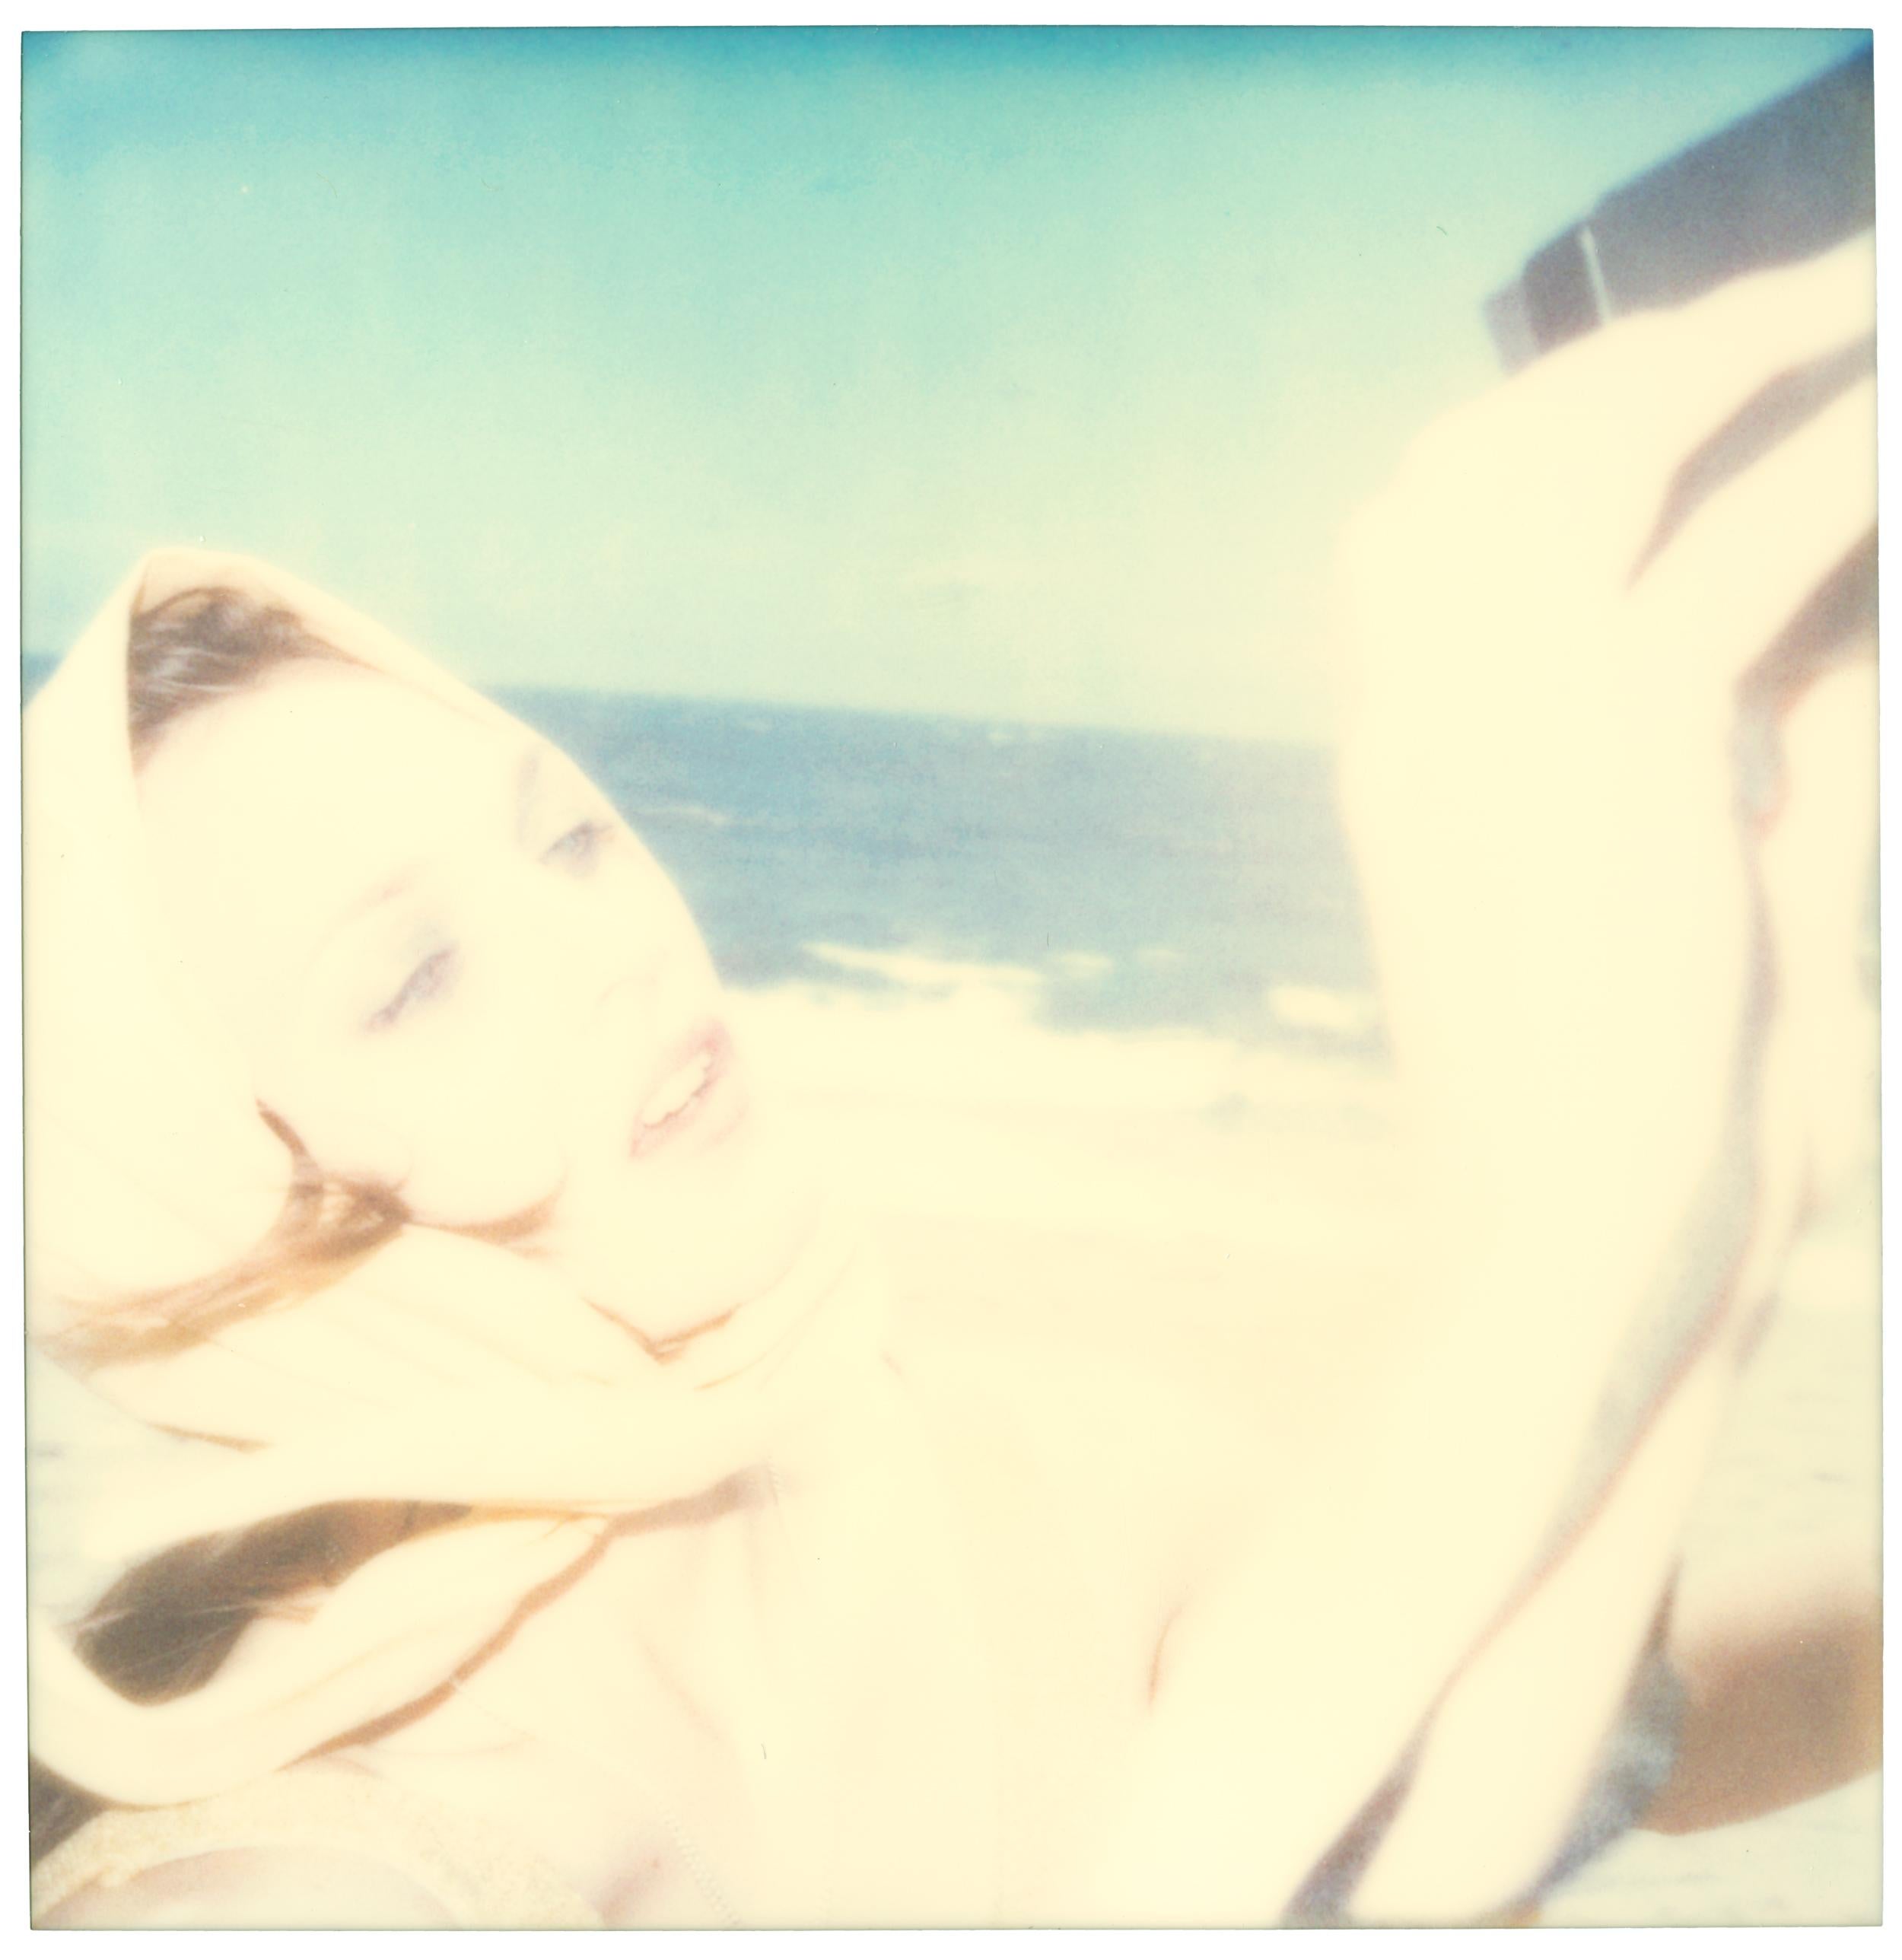 The Diva and the Boy (Beachshoot) - 9 pieces - Polaroid, Vintage, Contemporary 7